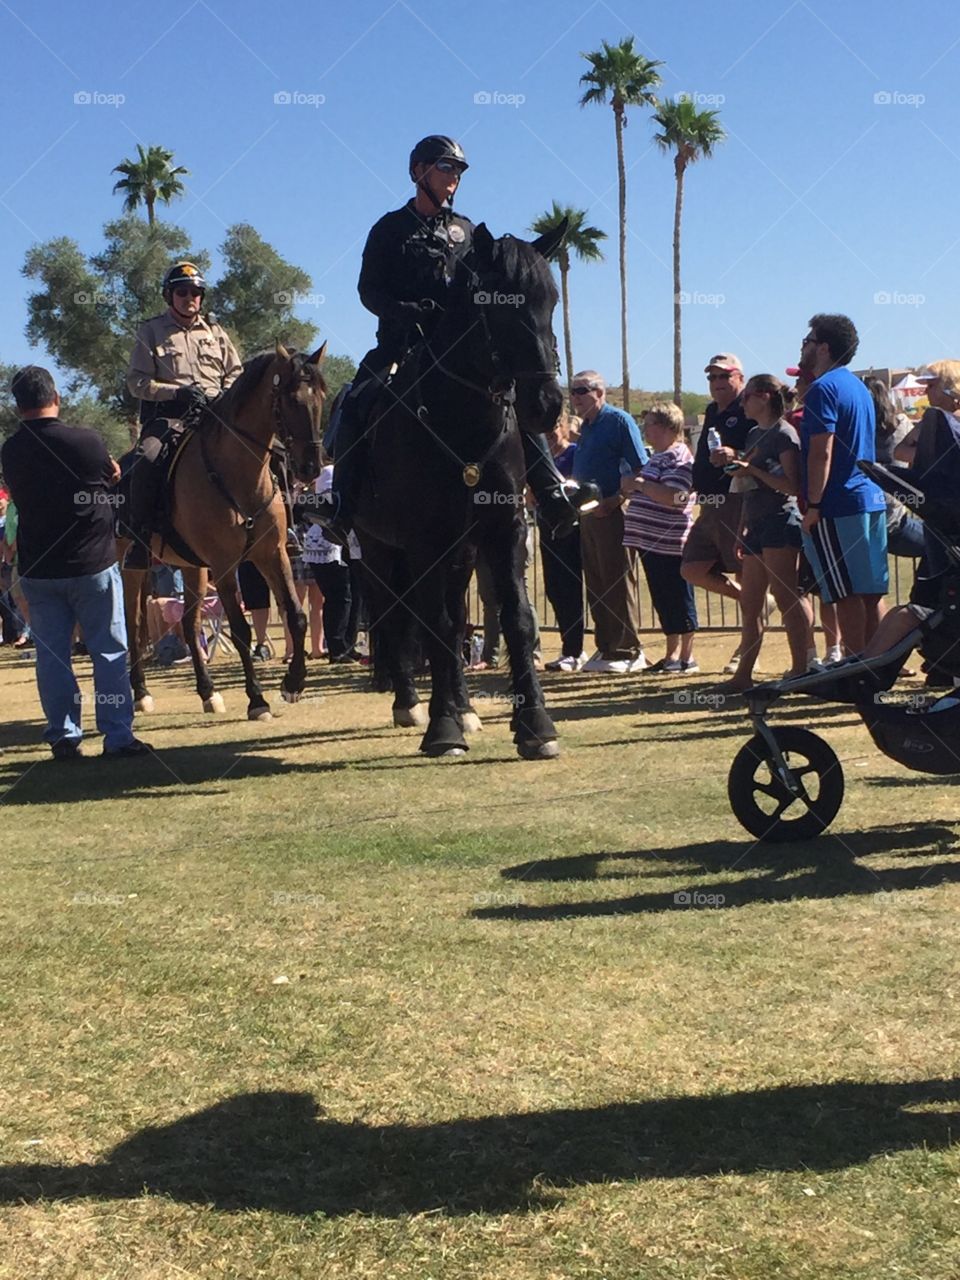 police on horseback 